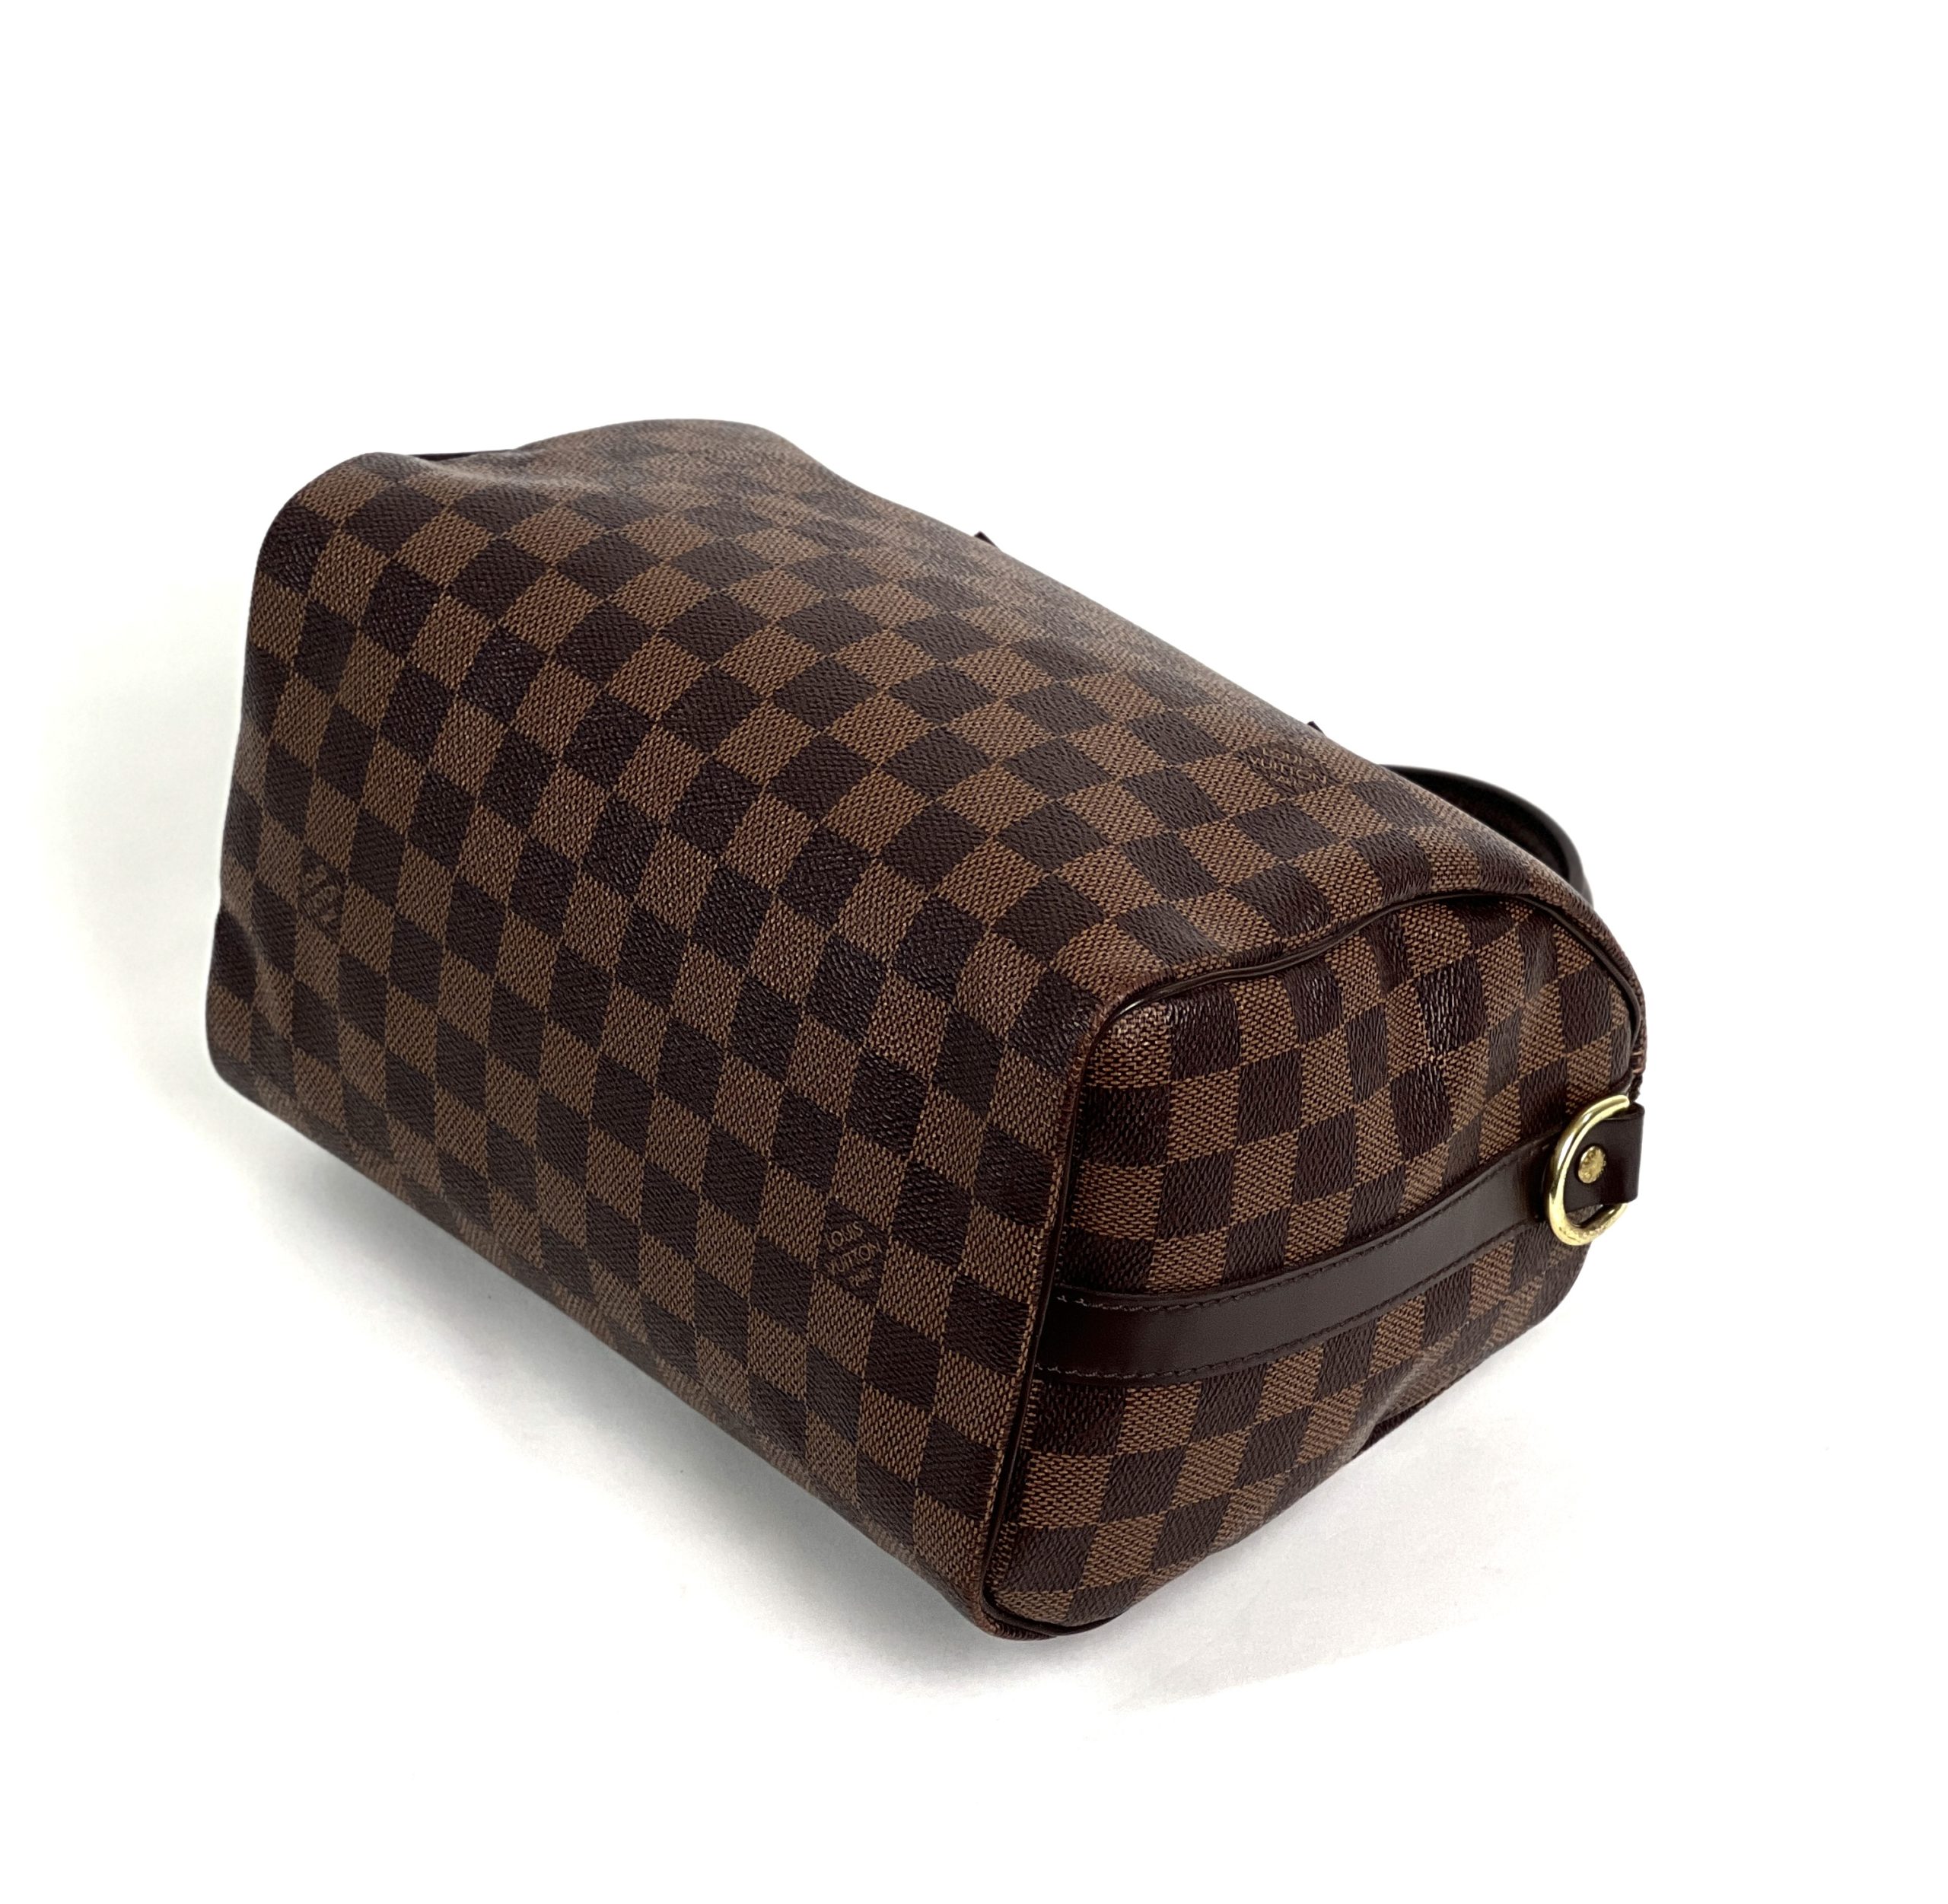 Louis Vuitton Cerise Monogram Empreinte Leather Speedy Bandouliere 25 Bag